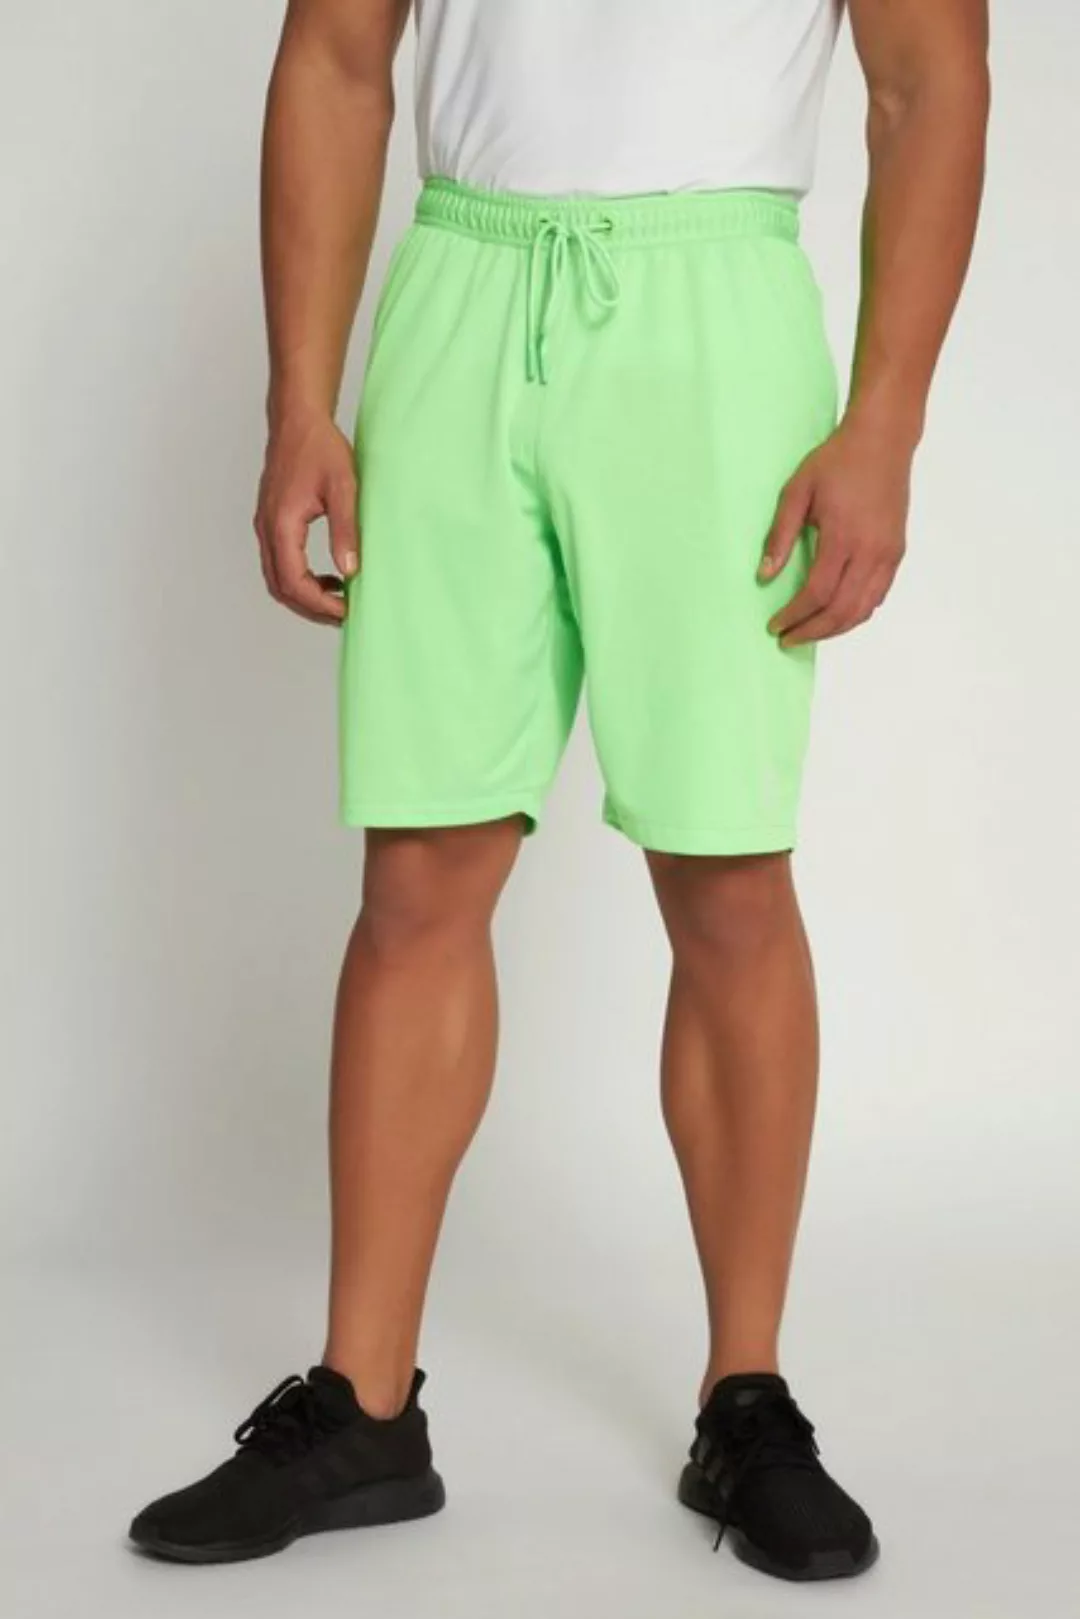 JP1880 Bermudas Funktions-Shorts Fitness QuickDry günstig online kaufen